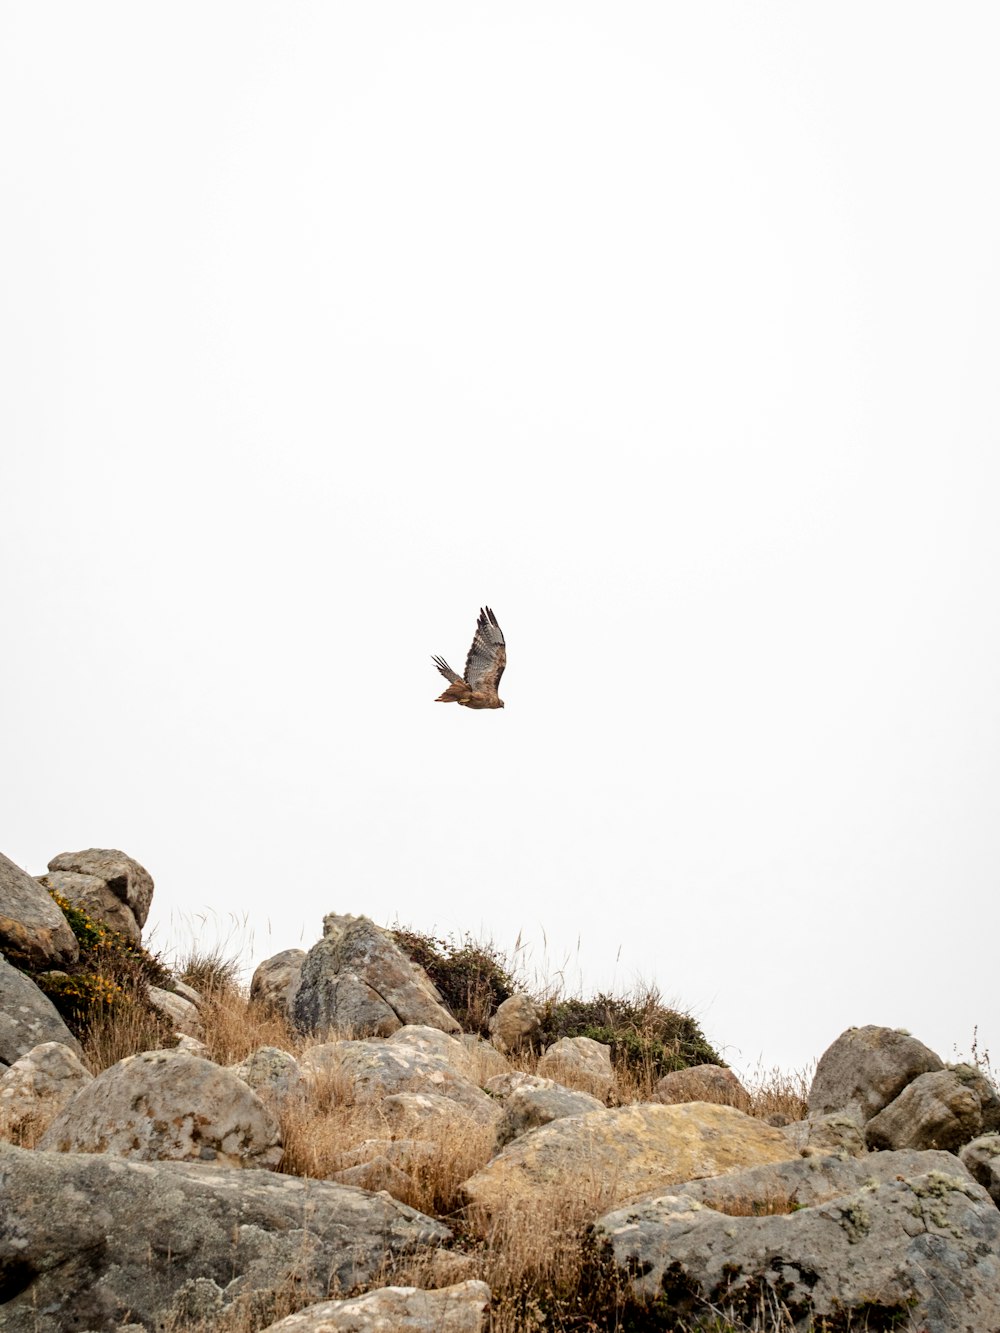 black bird flying over gray rocky mountain during daytime